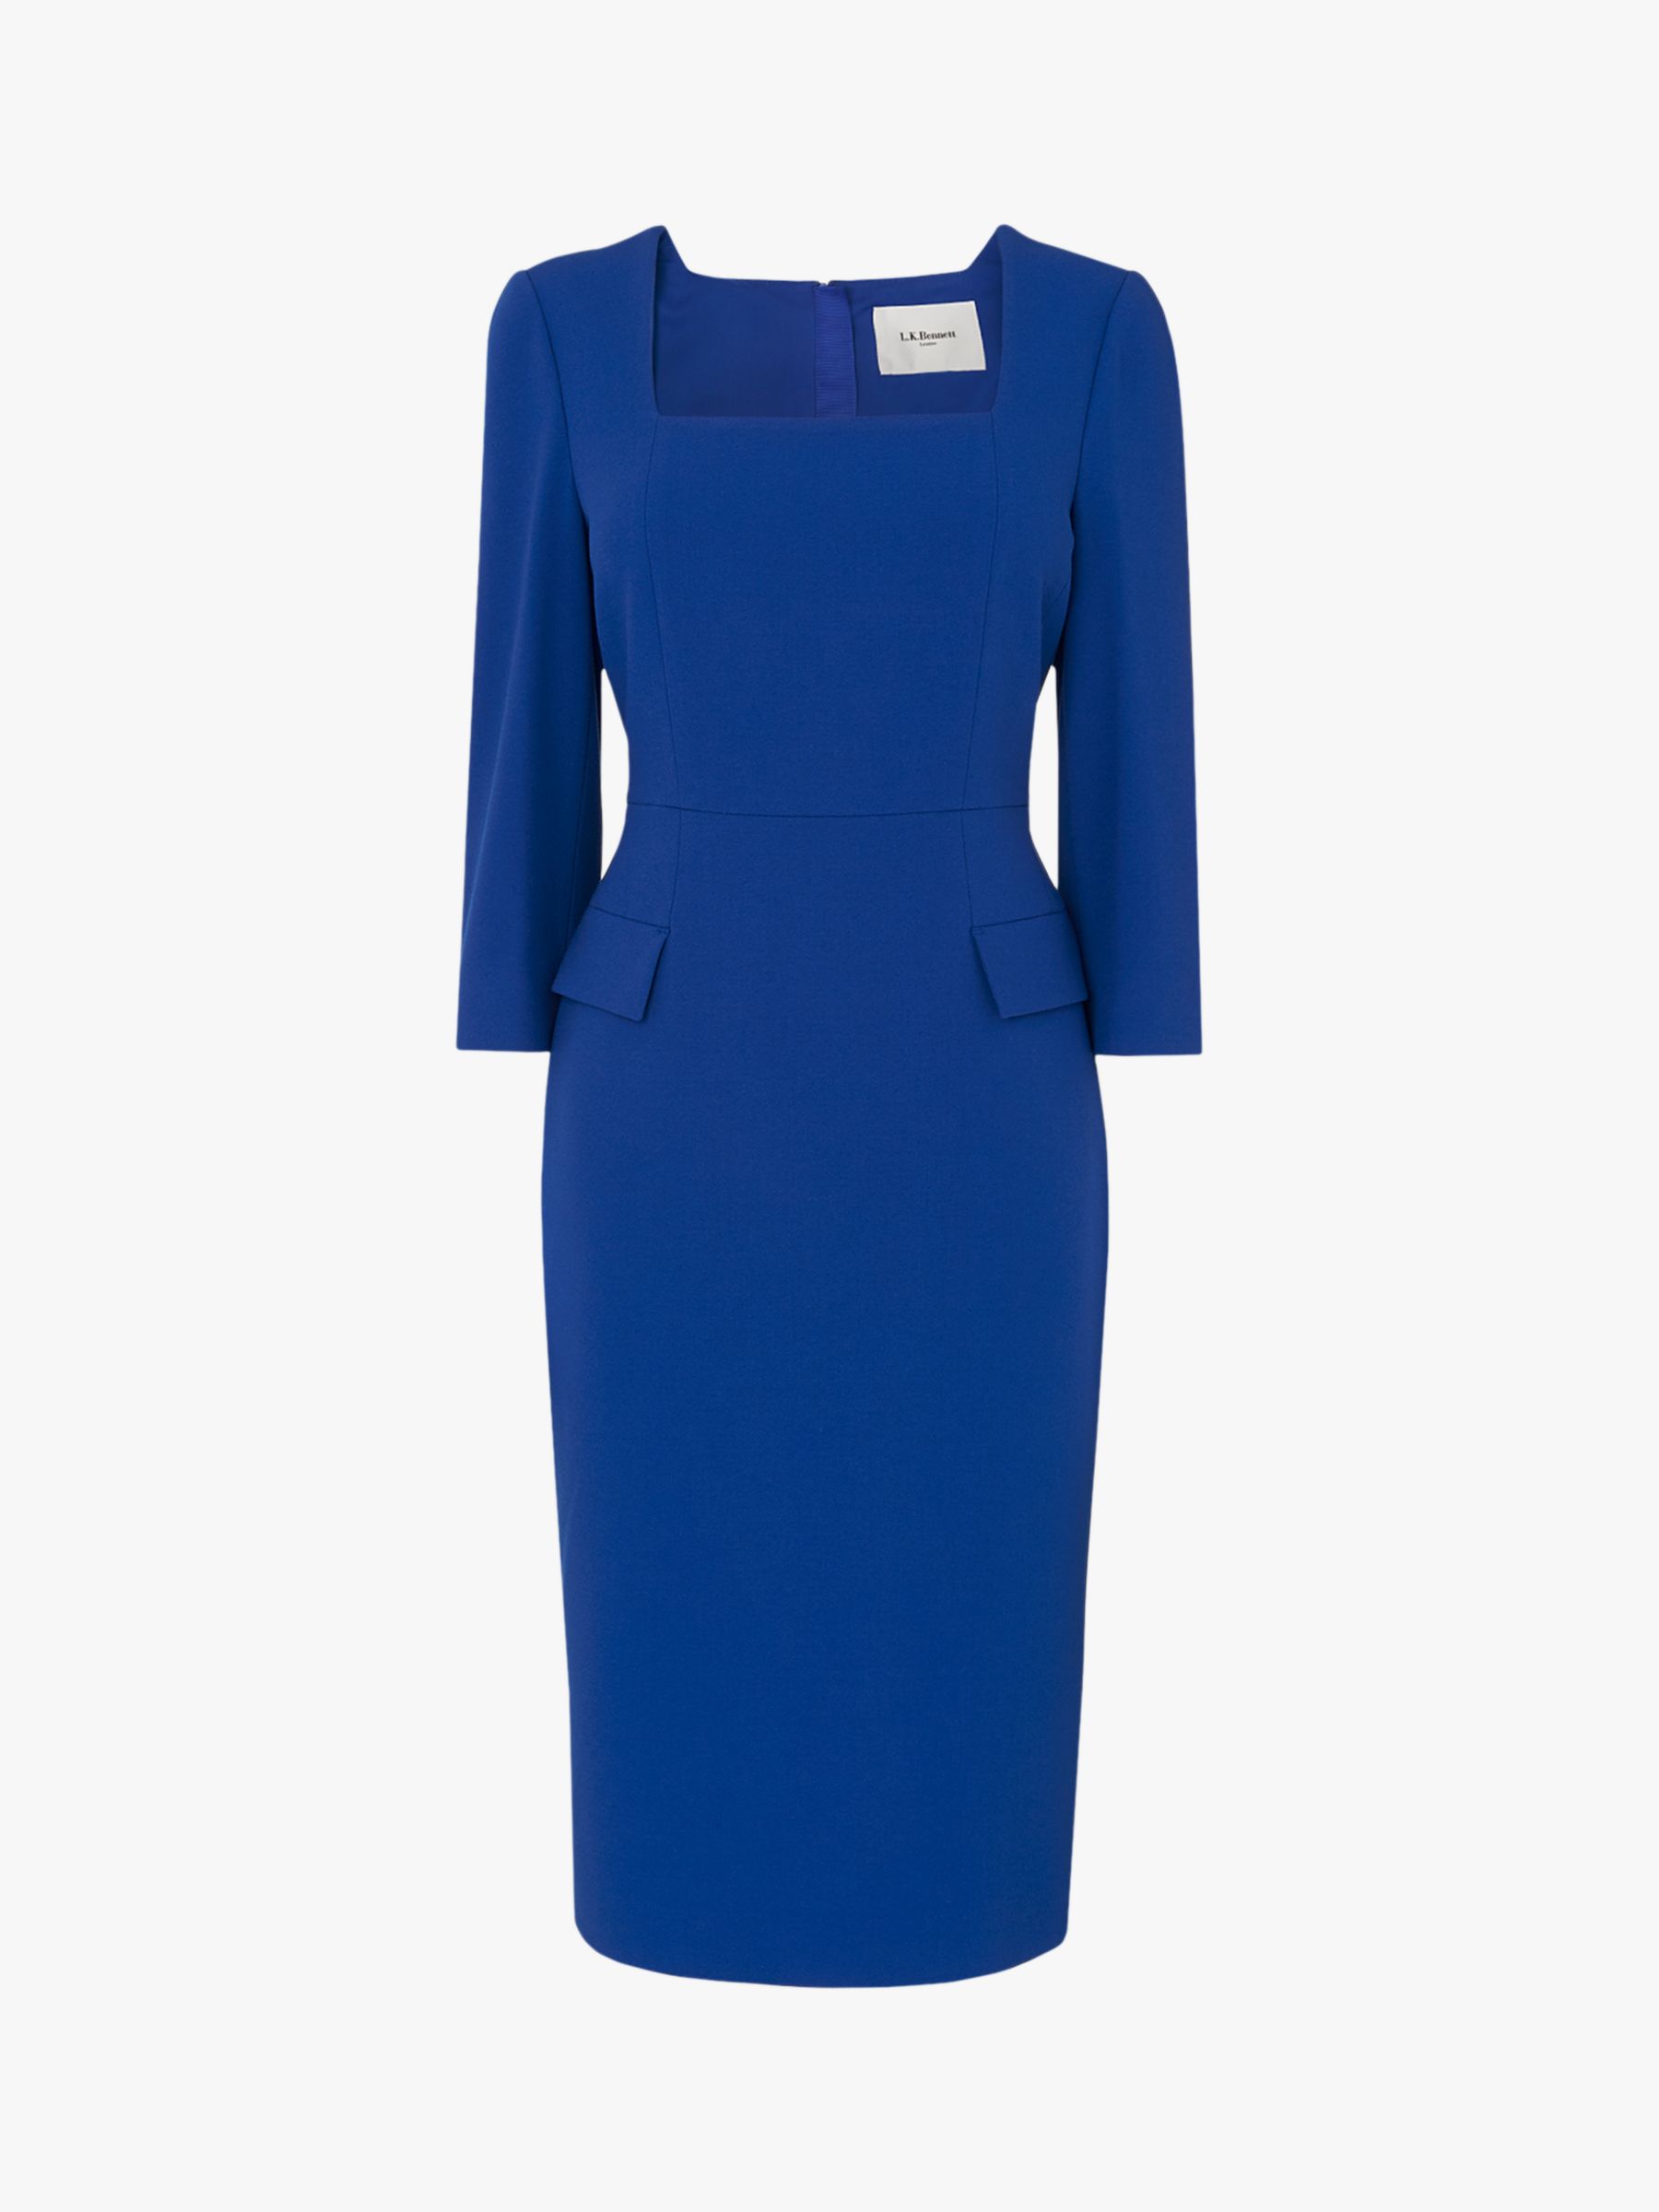 L.K.Bennett Ivor Pencil Dress, Royal Blue